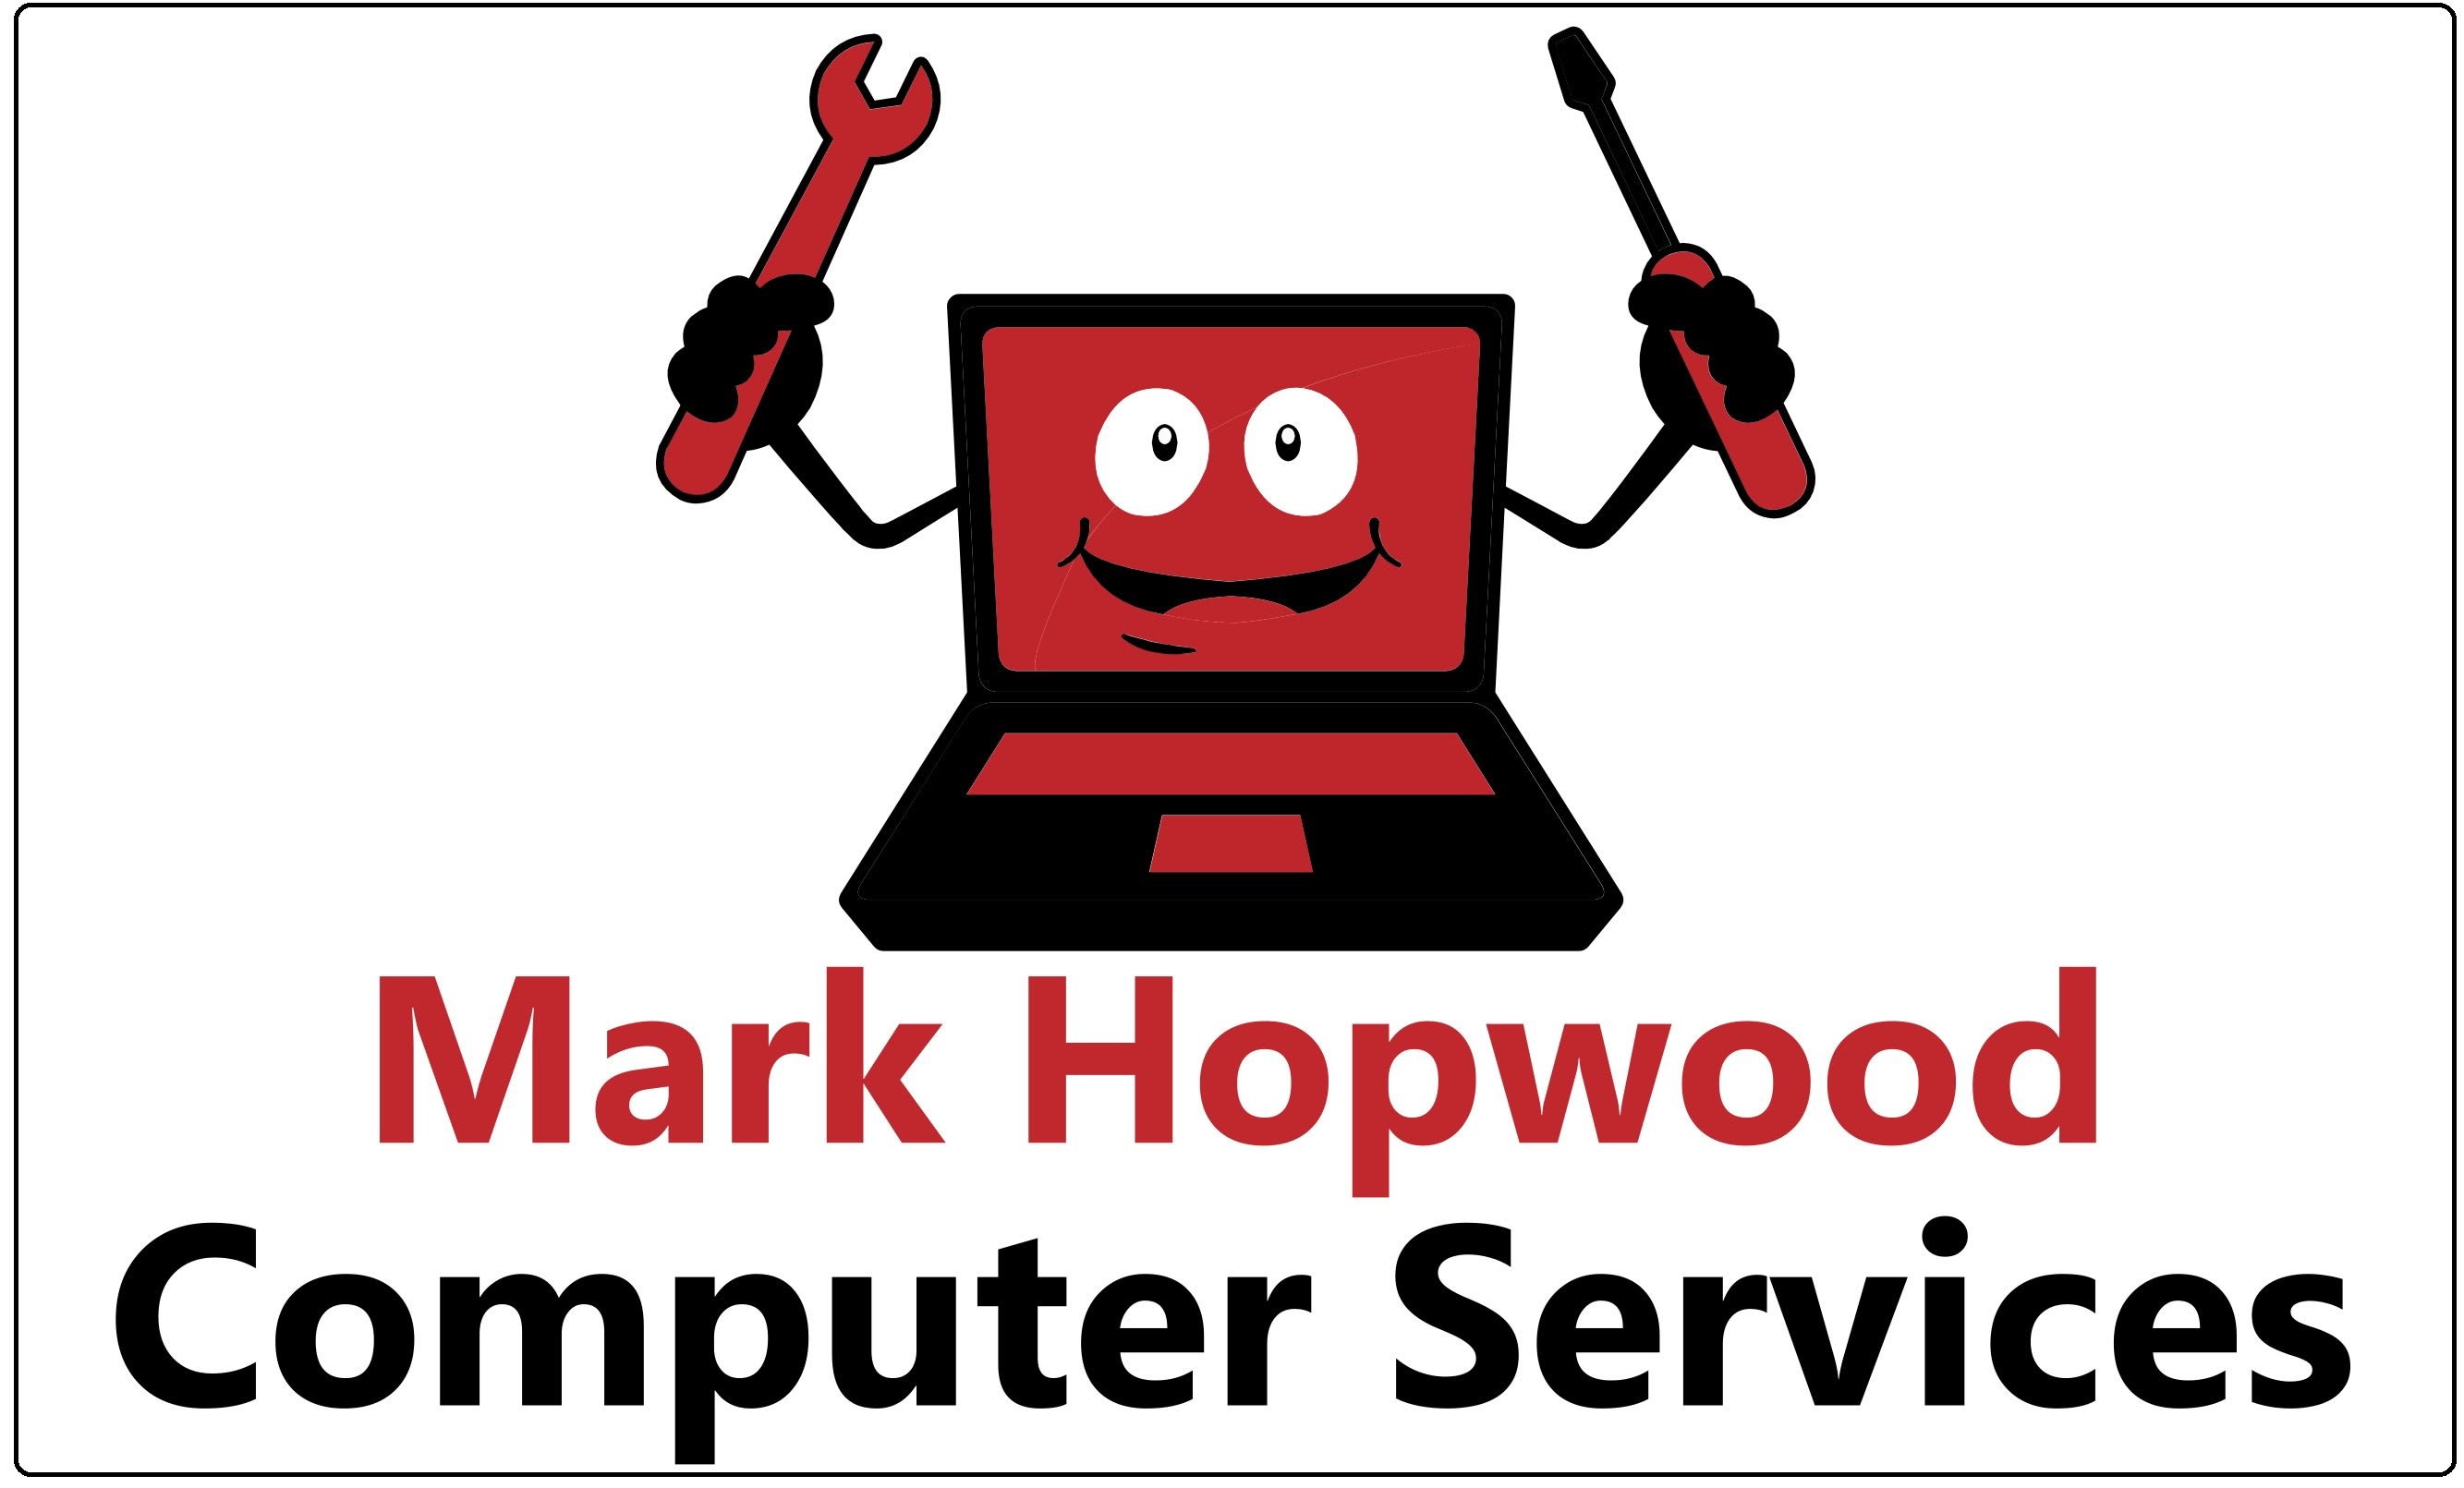 Mark Hopwood Computer Services